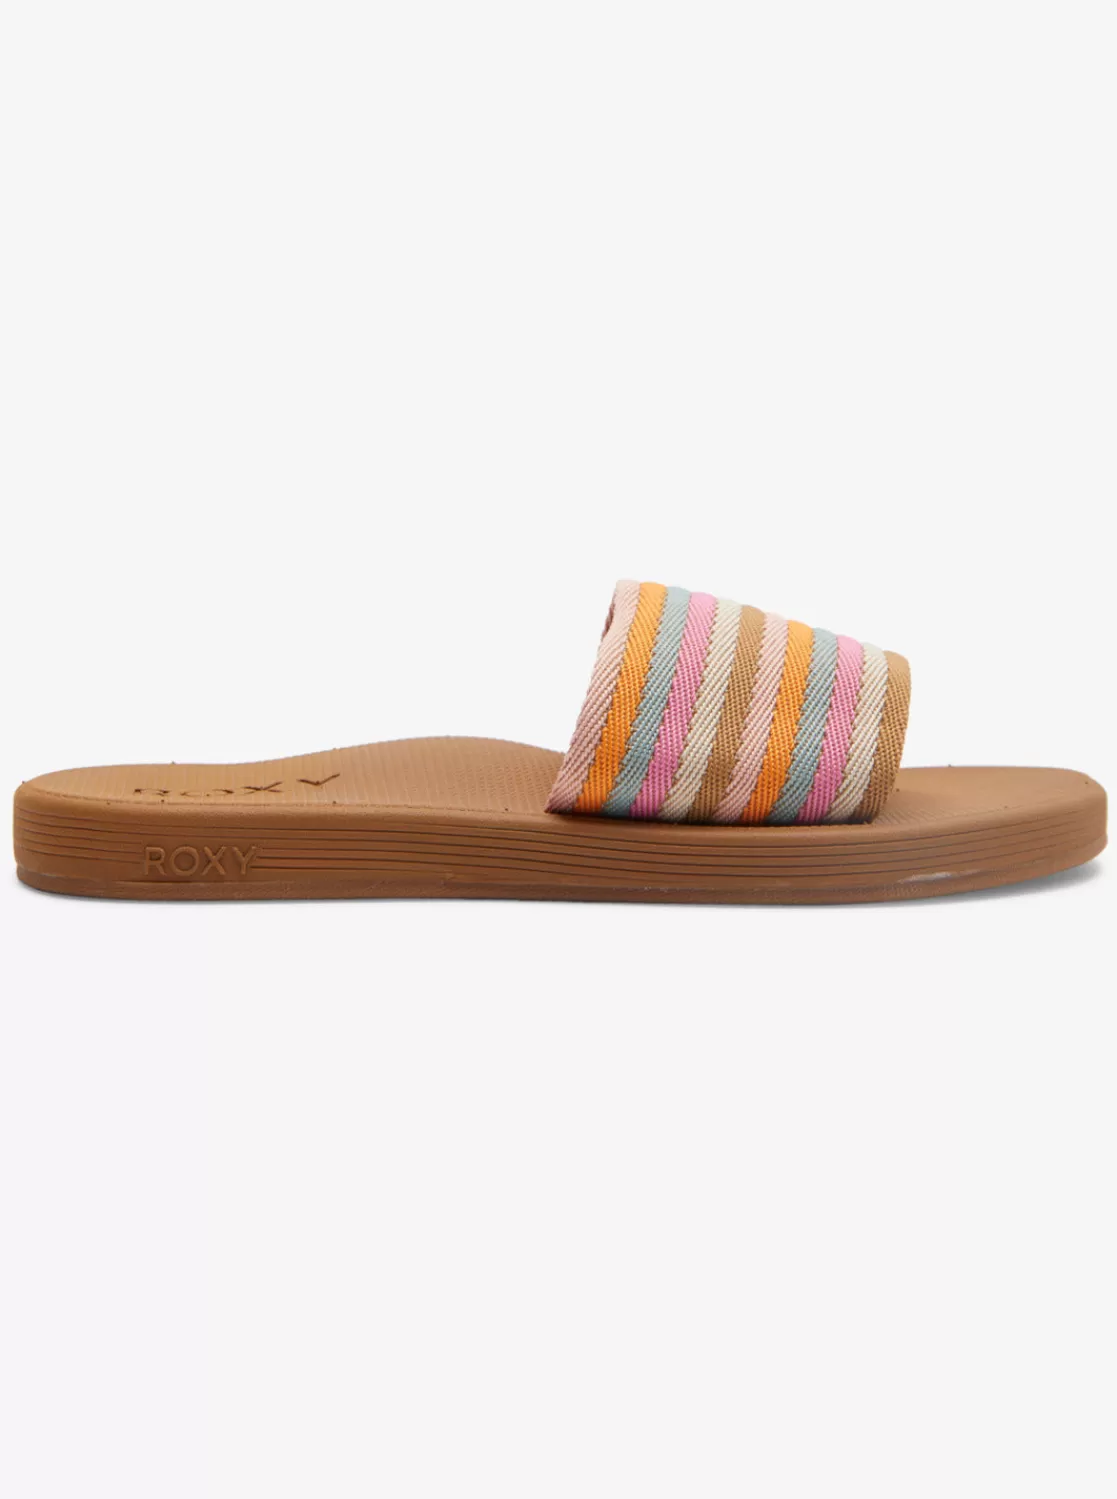 Beachie Breeze Sandals-ROXY Discount